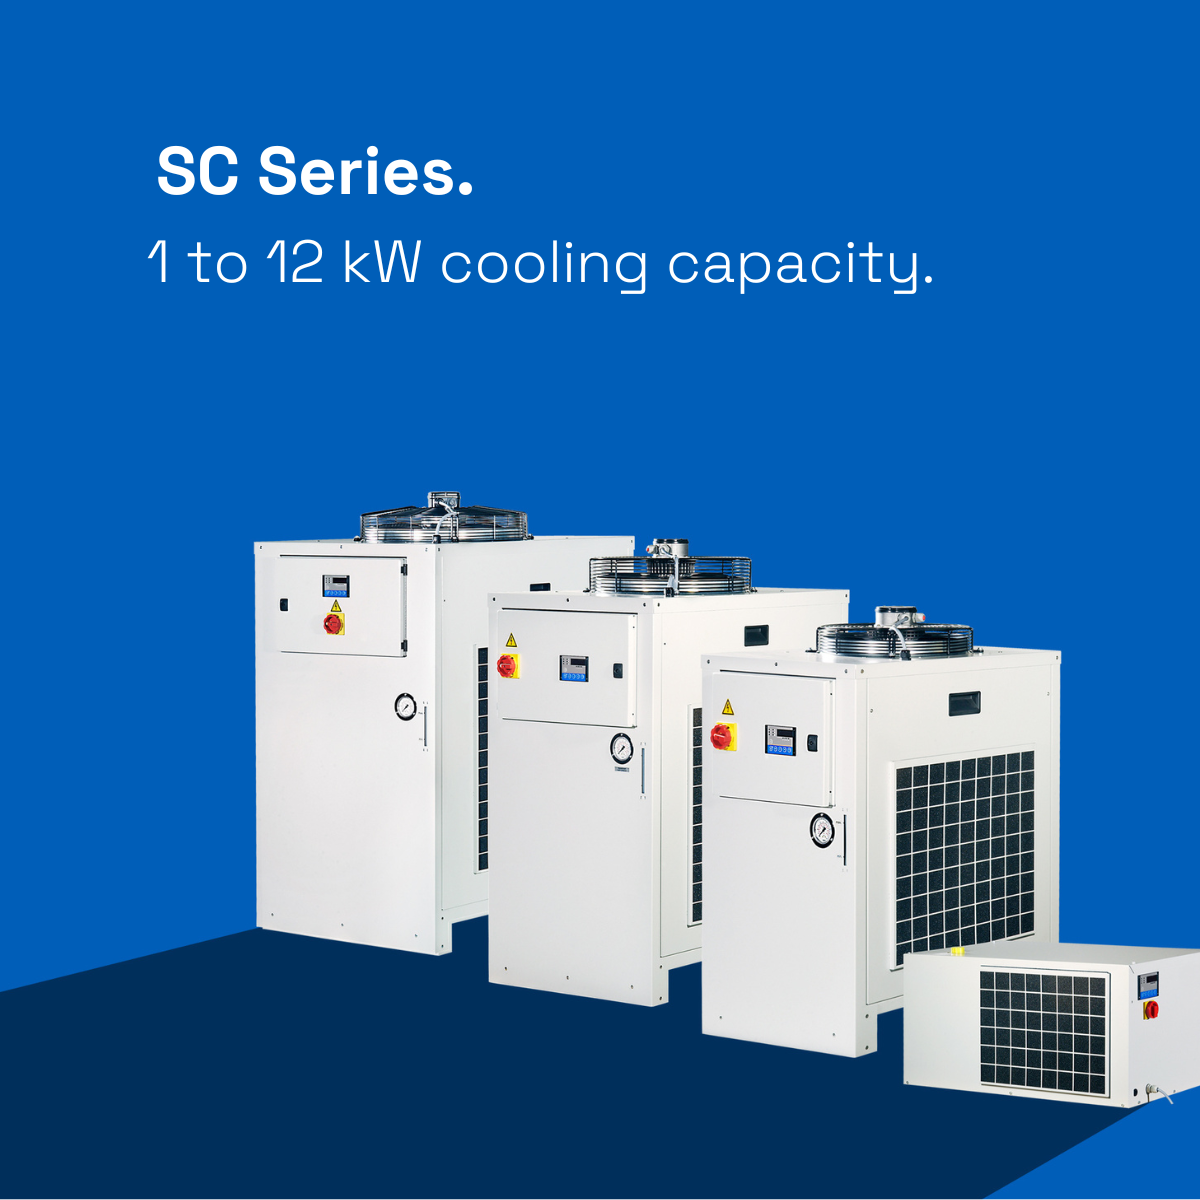 Kool°S series | SC series. Cooling capacities 1 kW up to 12 kW.